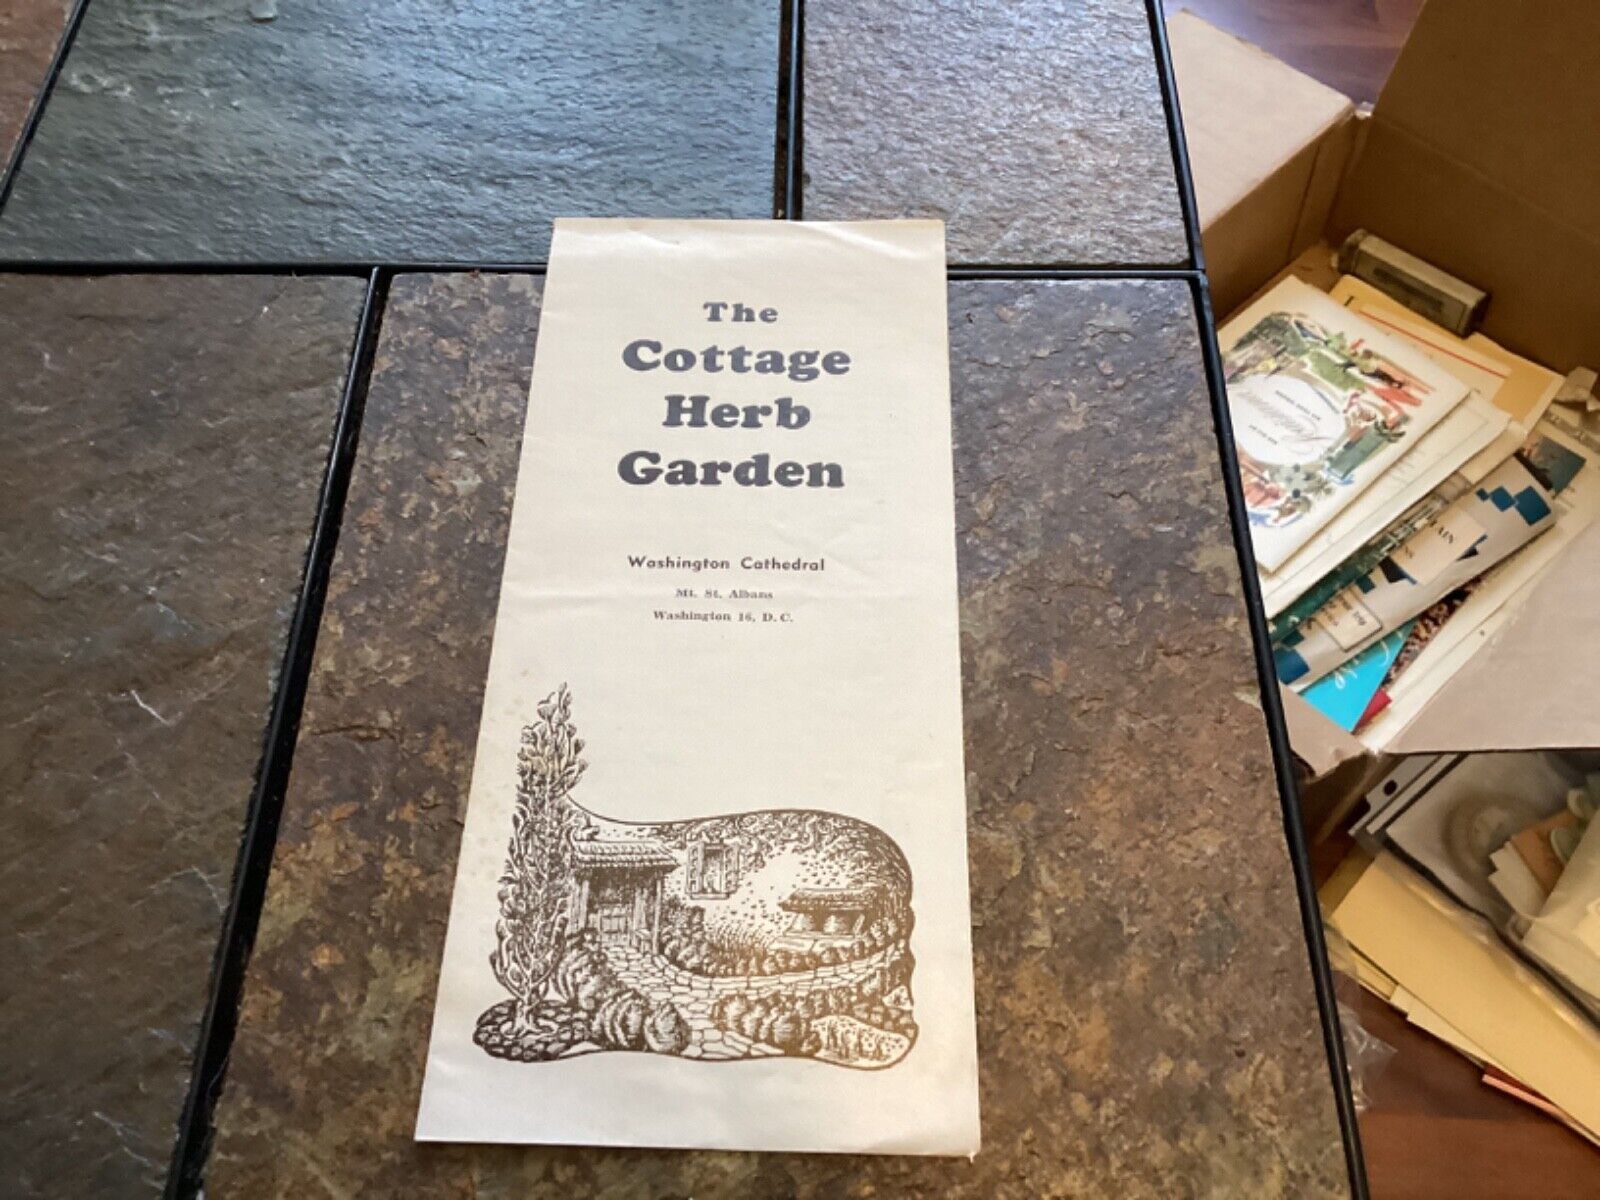 The Cottage Herb Garden Price List, Mt. St. Albans, Washington D.C. Brochure